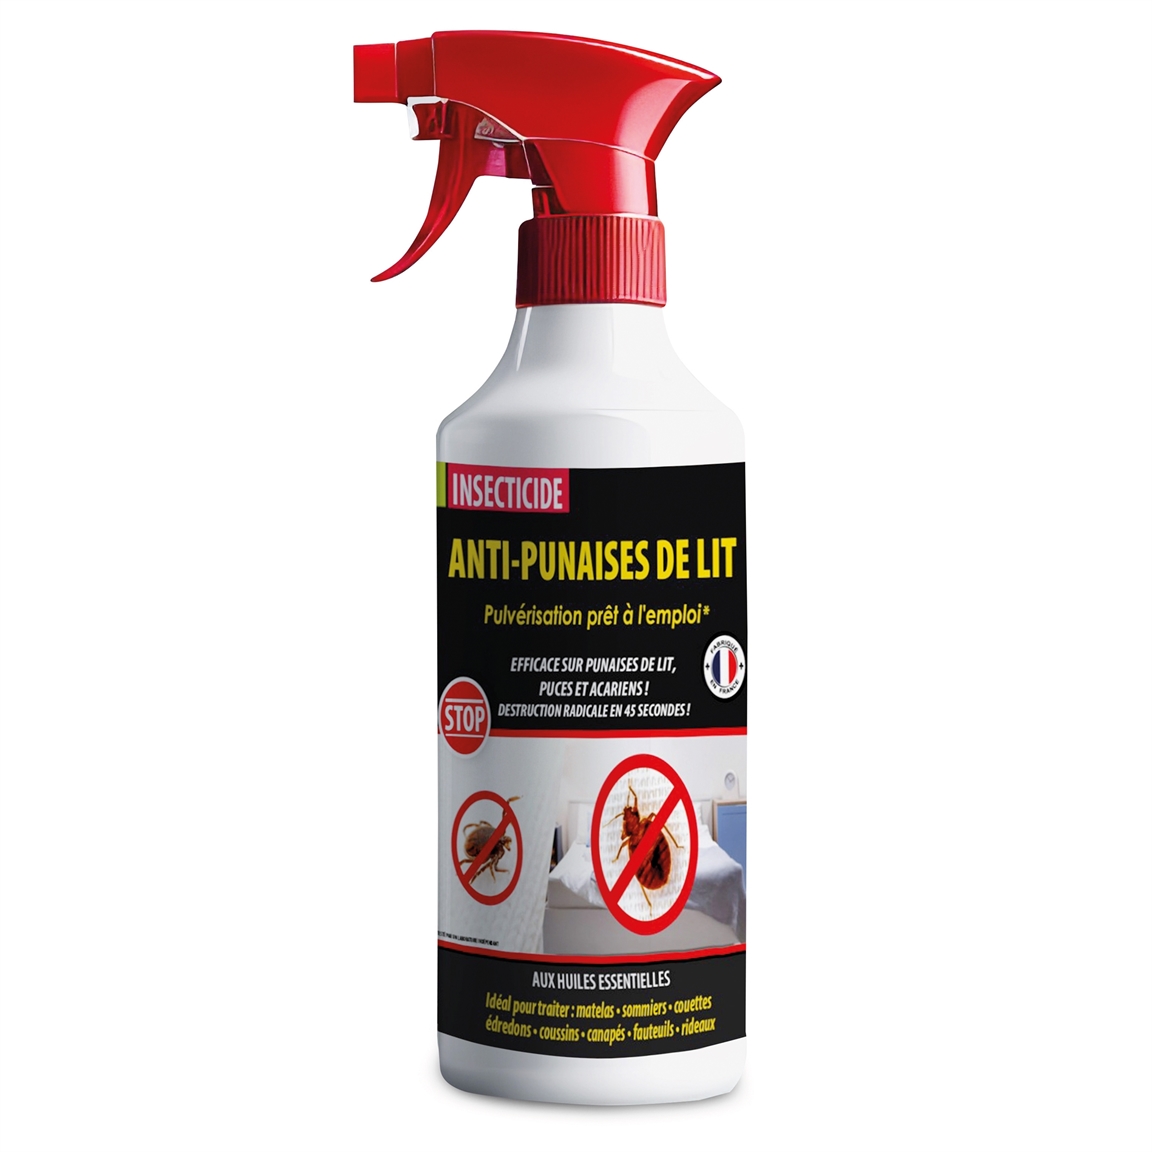 ALT'O'PUNAISES de lit – insecticide – spray 750 ml à 26,90 € - Penntybio